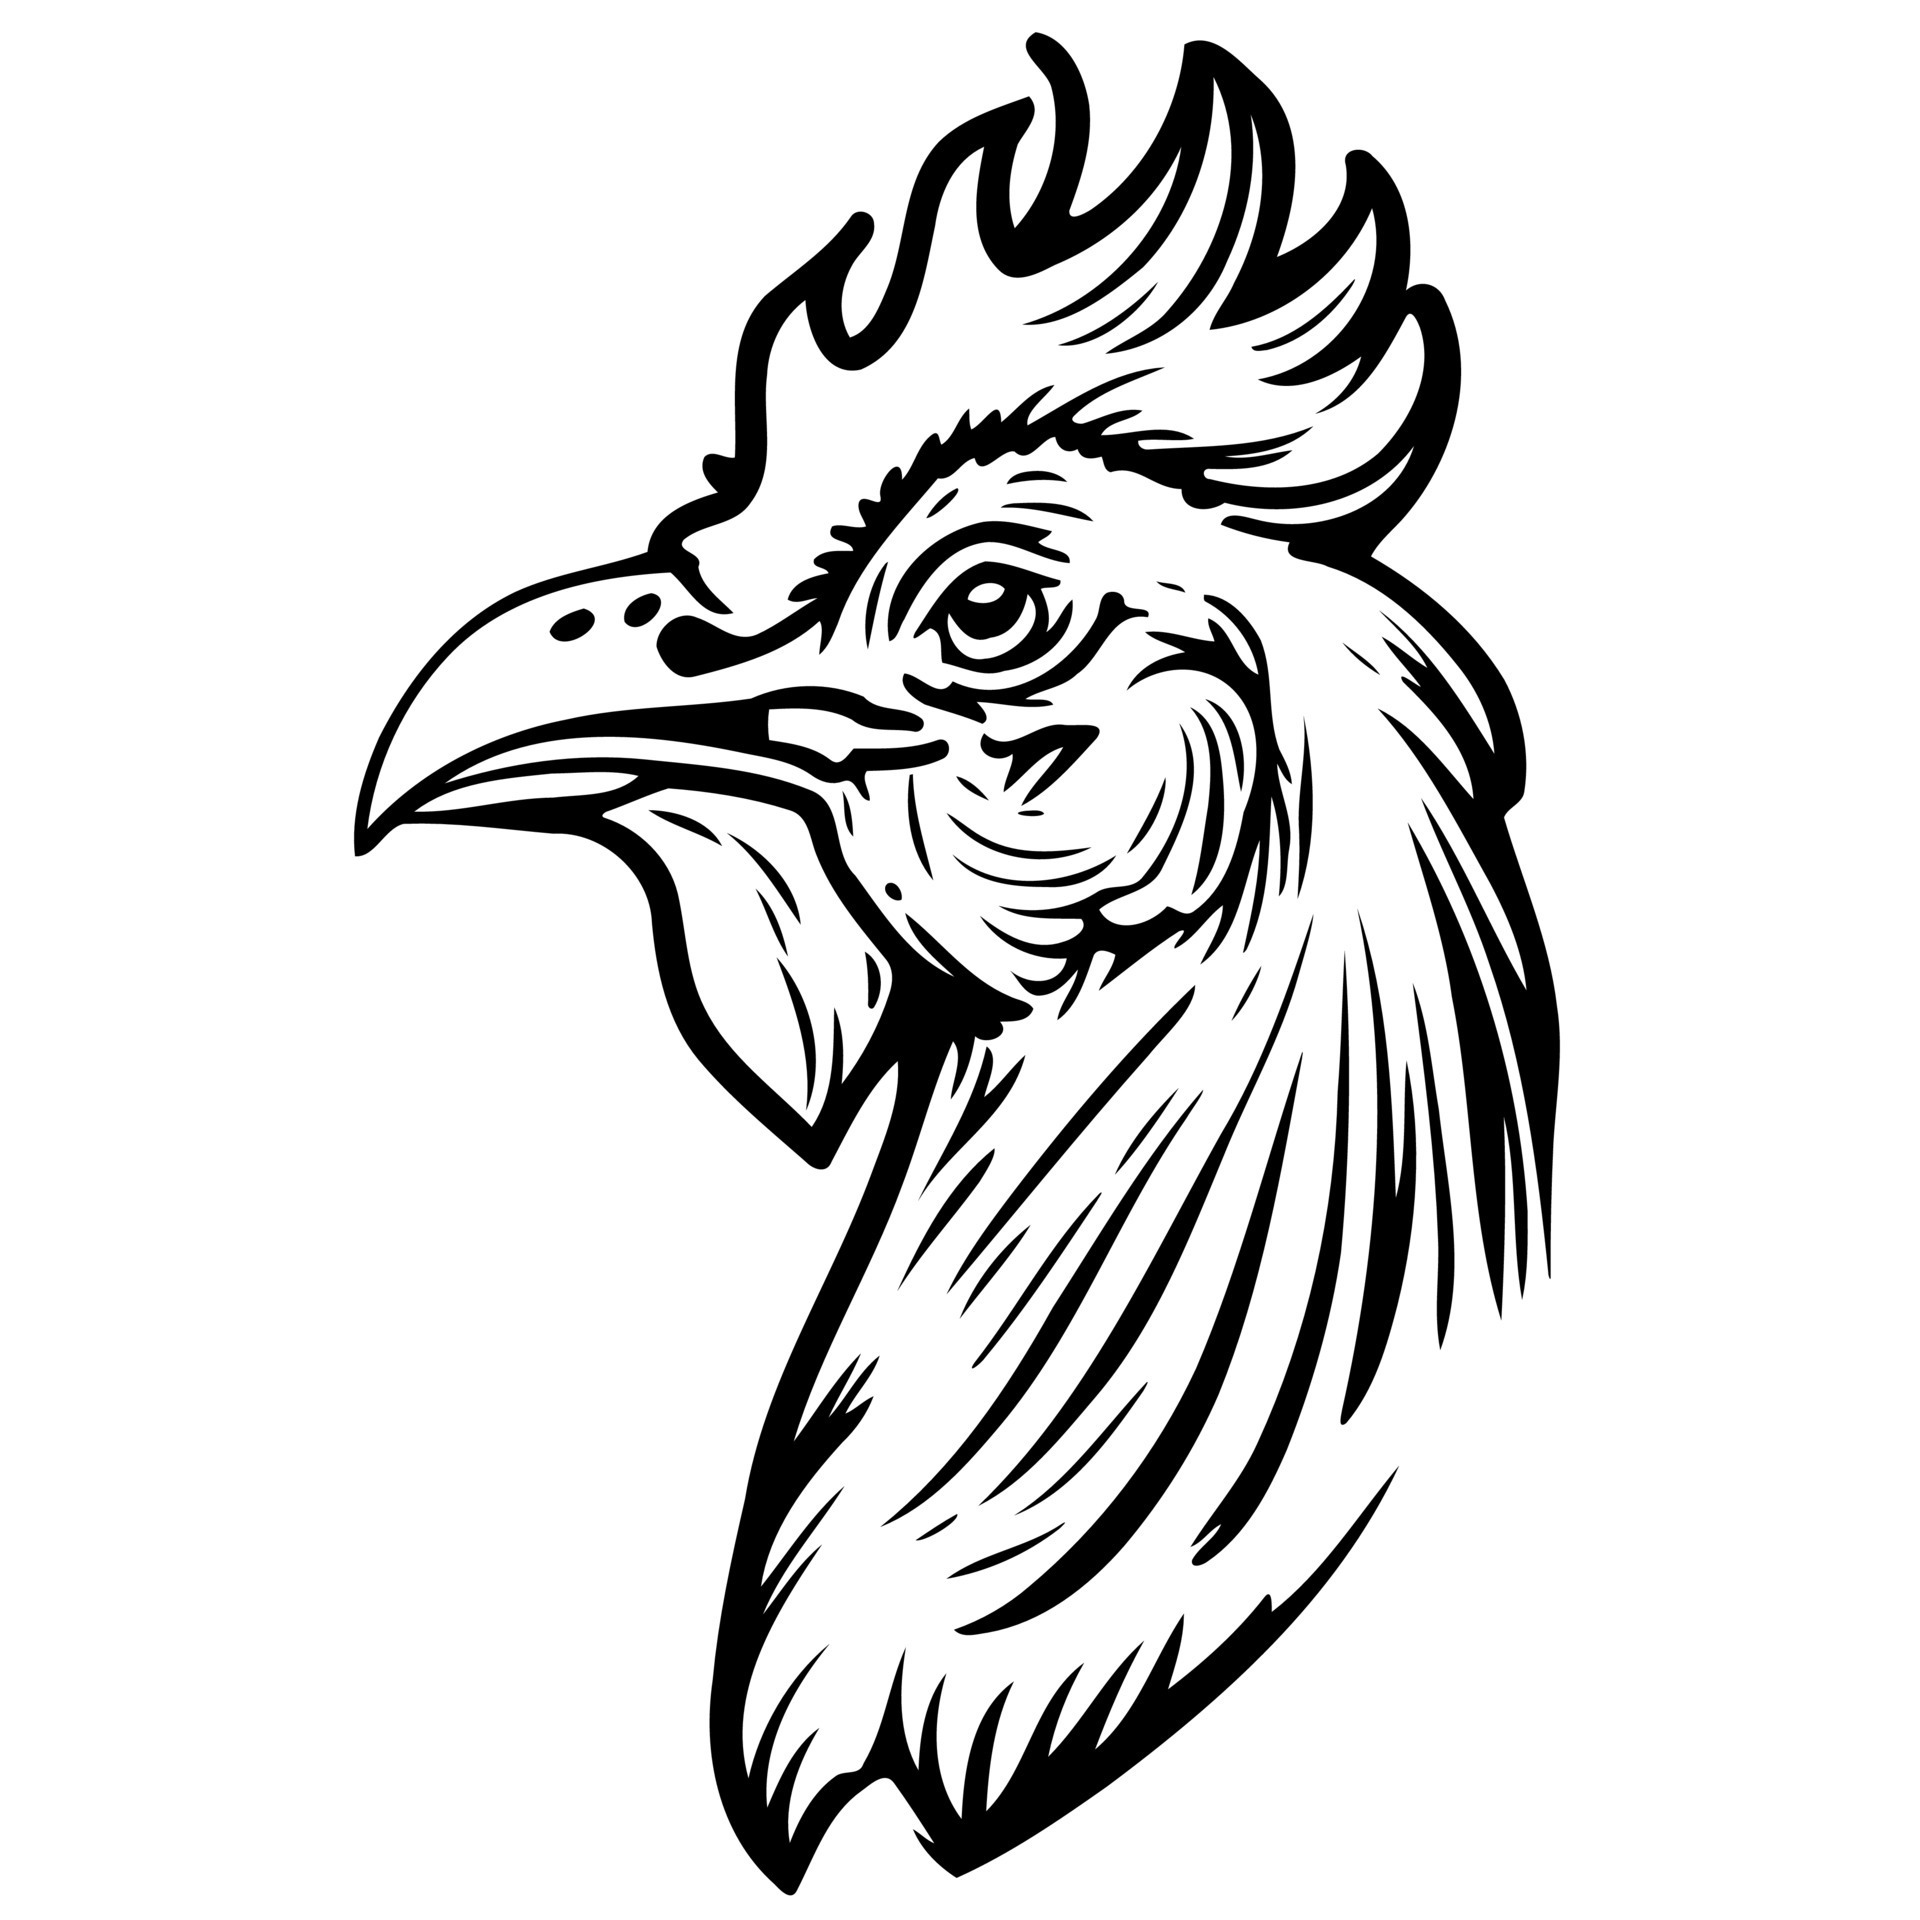 1500 Drawing Of The Chicken Head Illustrations RoyaltyFree Vector  Graphics  Clip Art  iStock